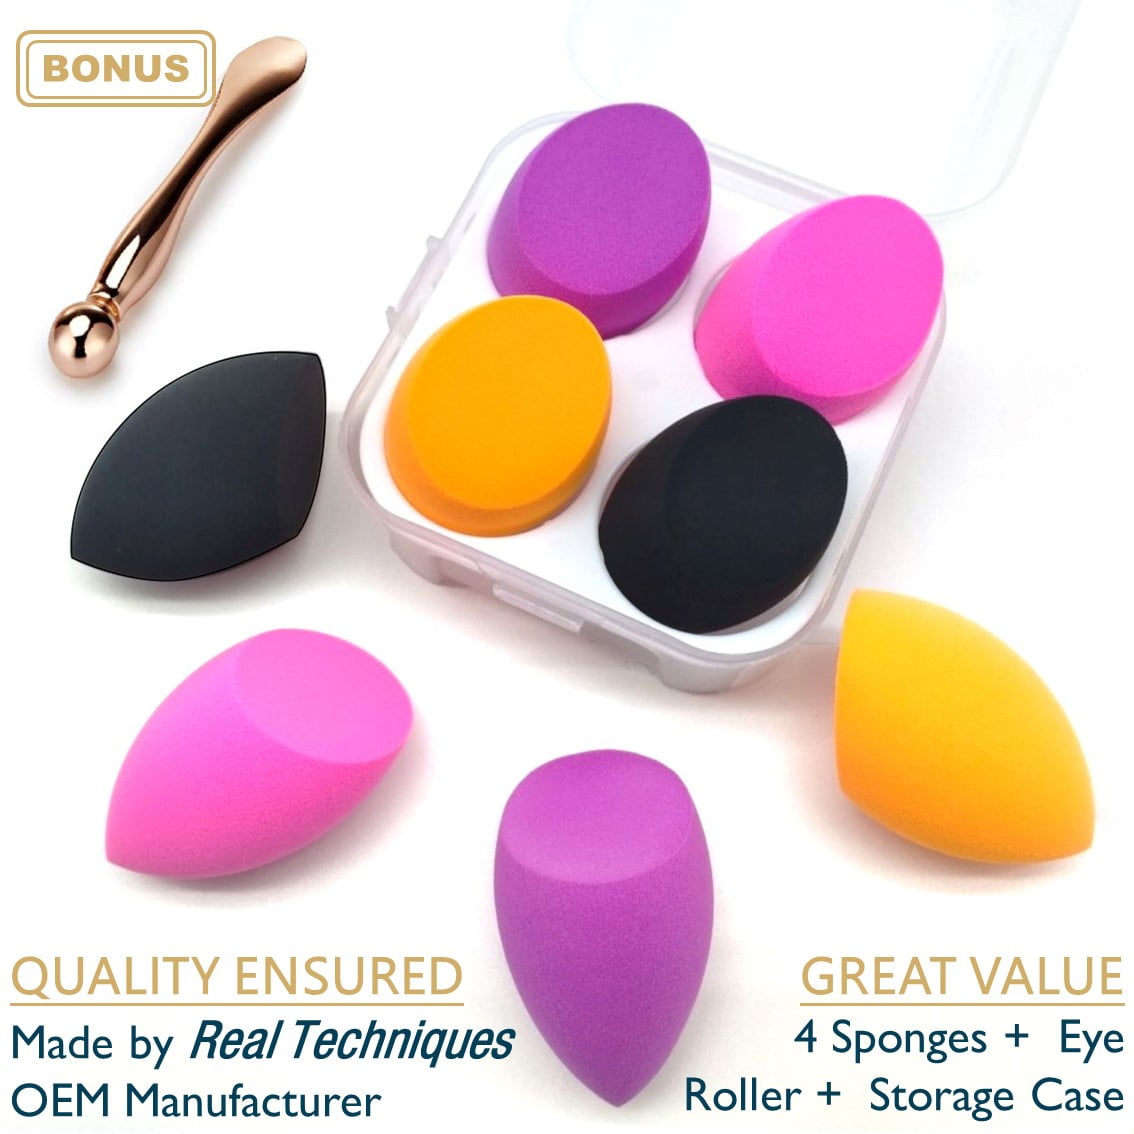 Beauty Blender Makeup Sponge Set With Bonus Metal Face Roller, 4 Pieces